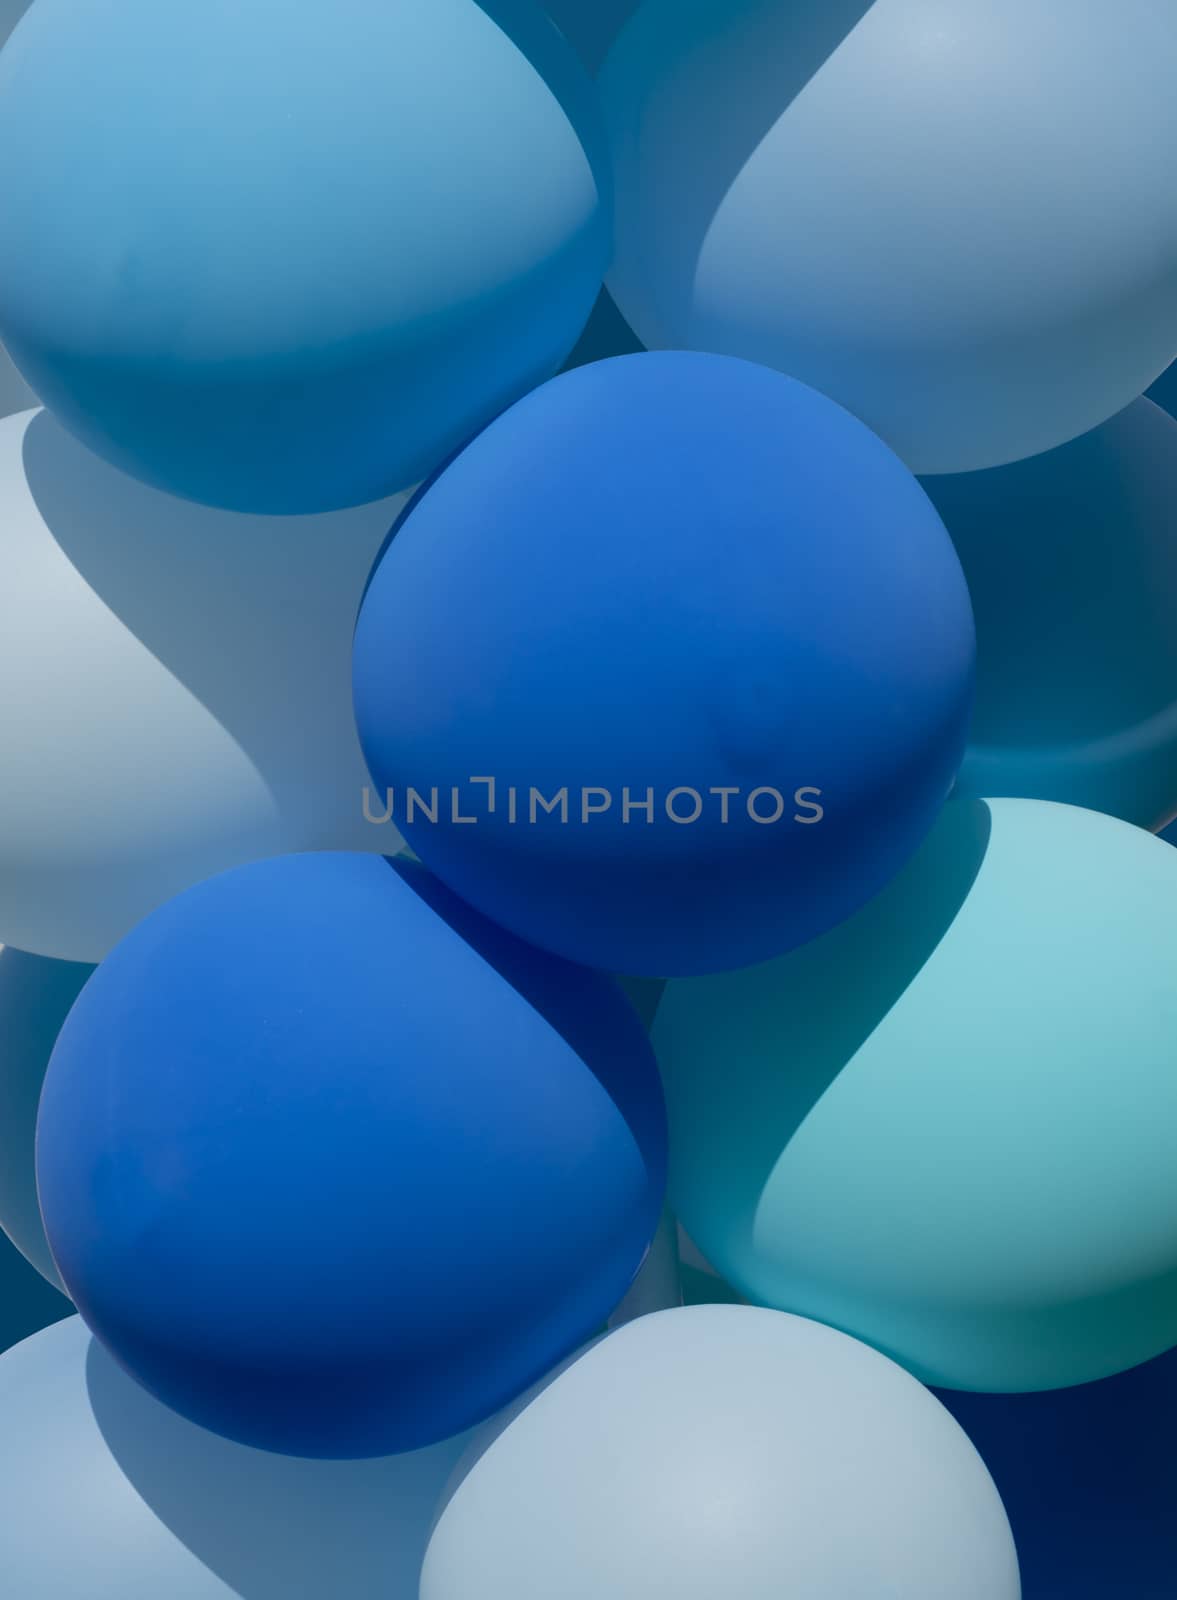 Full frame of blue balloons, anniversary, celebration, festive background, backdrop or texture.